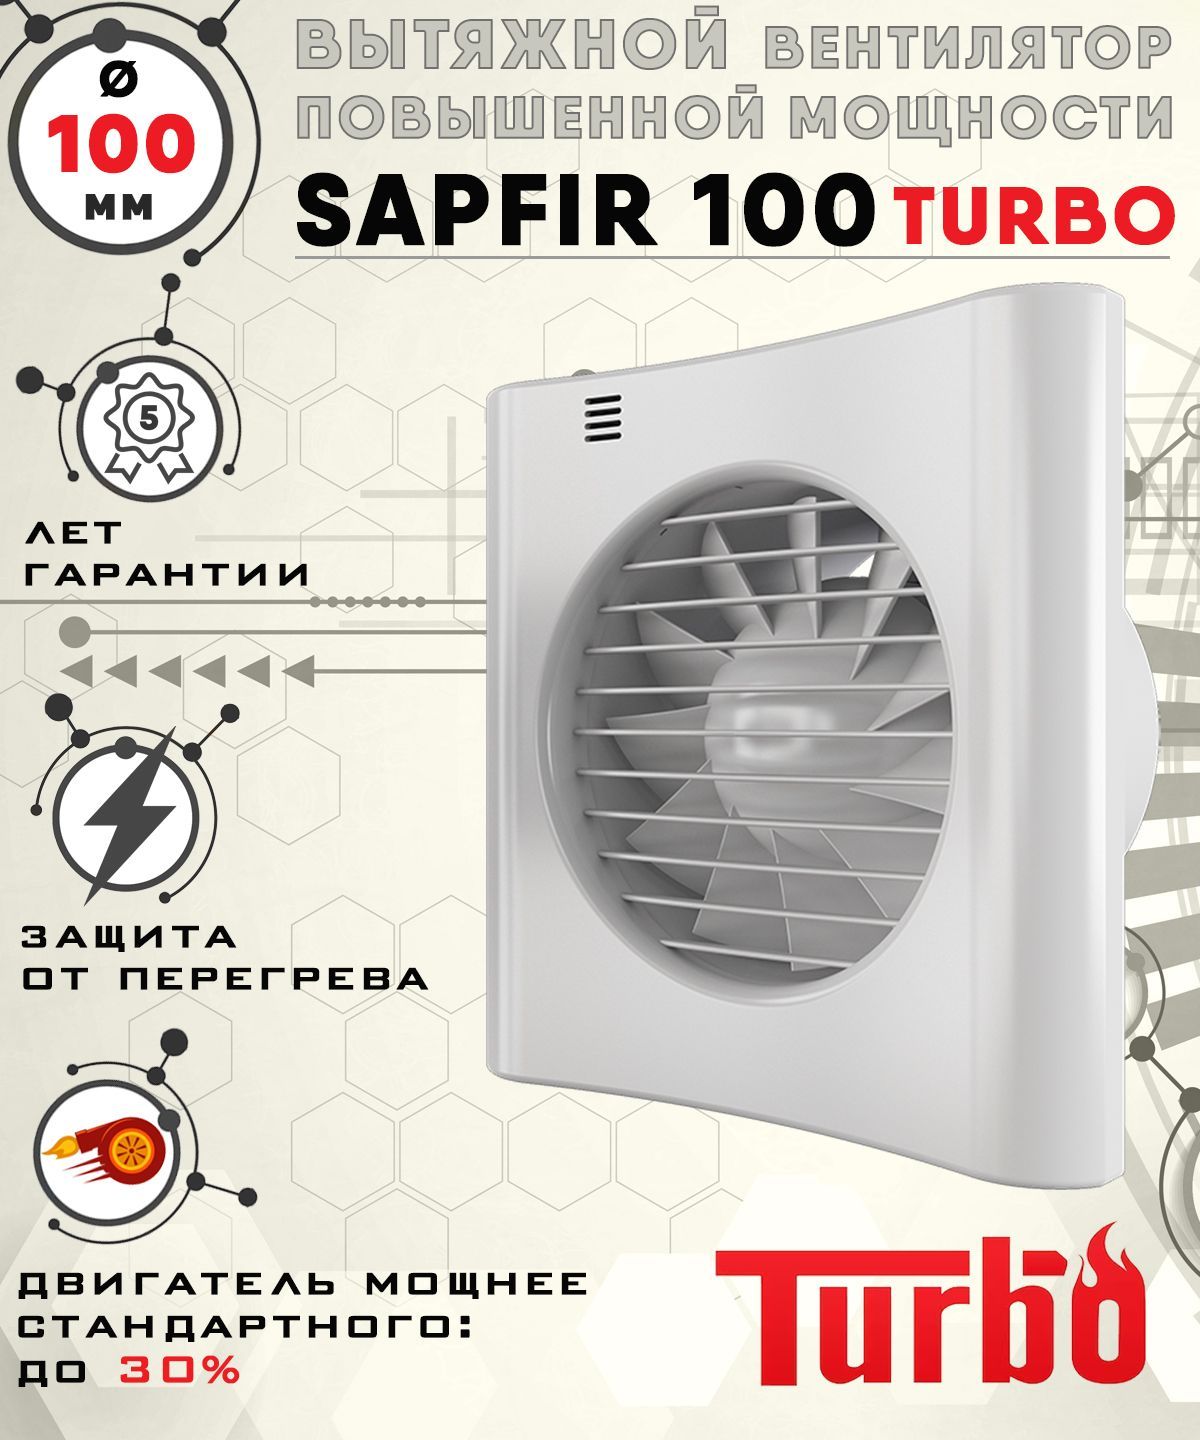 SAPFIR 100 TURBO вентилятор вытяжной диаметр 100 мм ZERNBERG